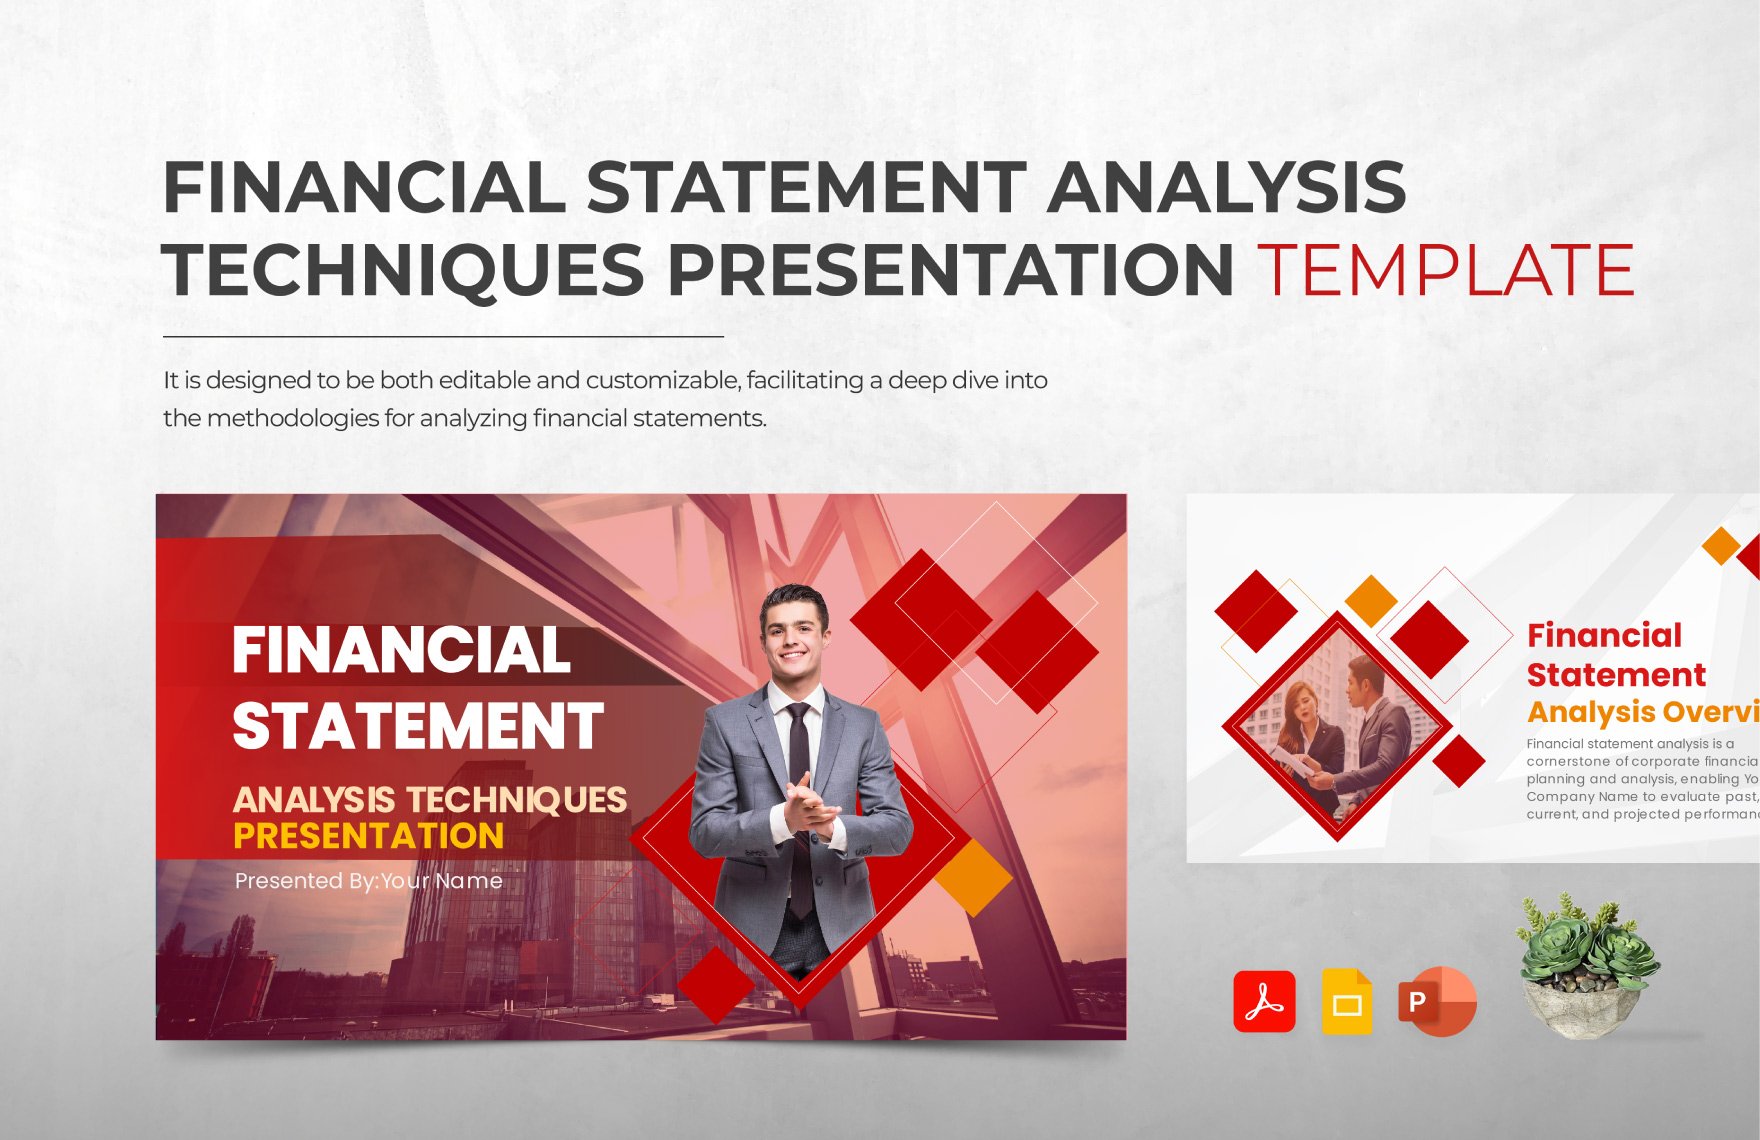 Financial Statement Analysis Techniques Presentation Template